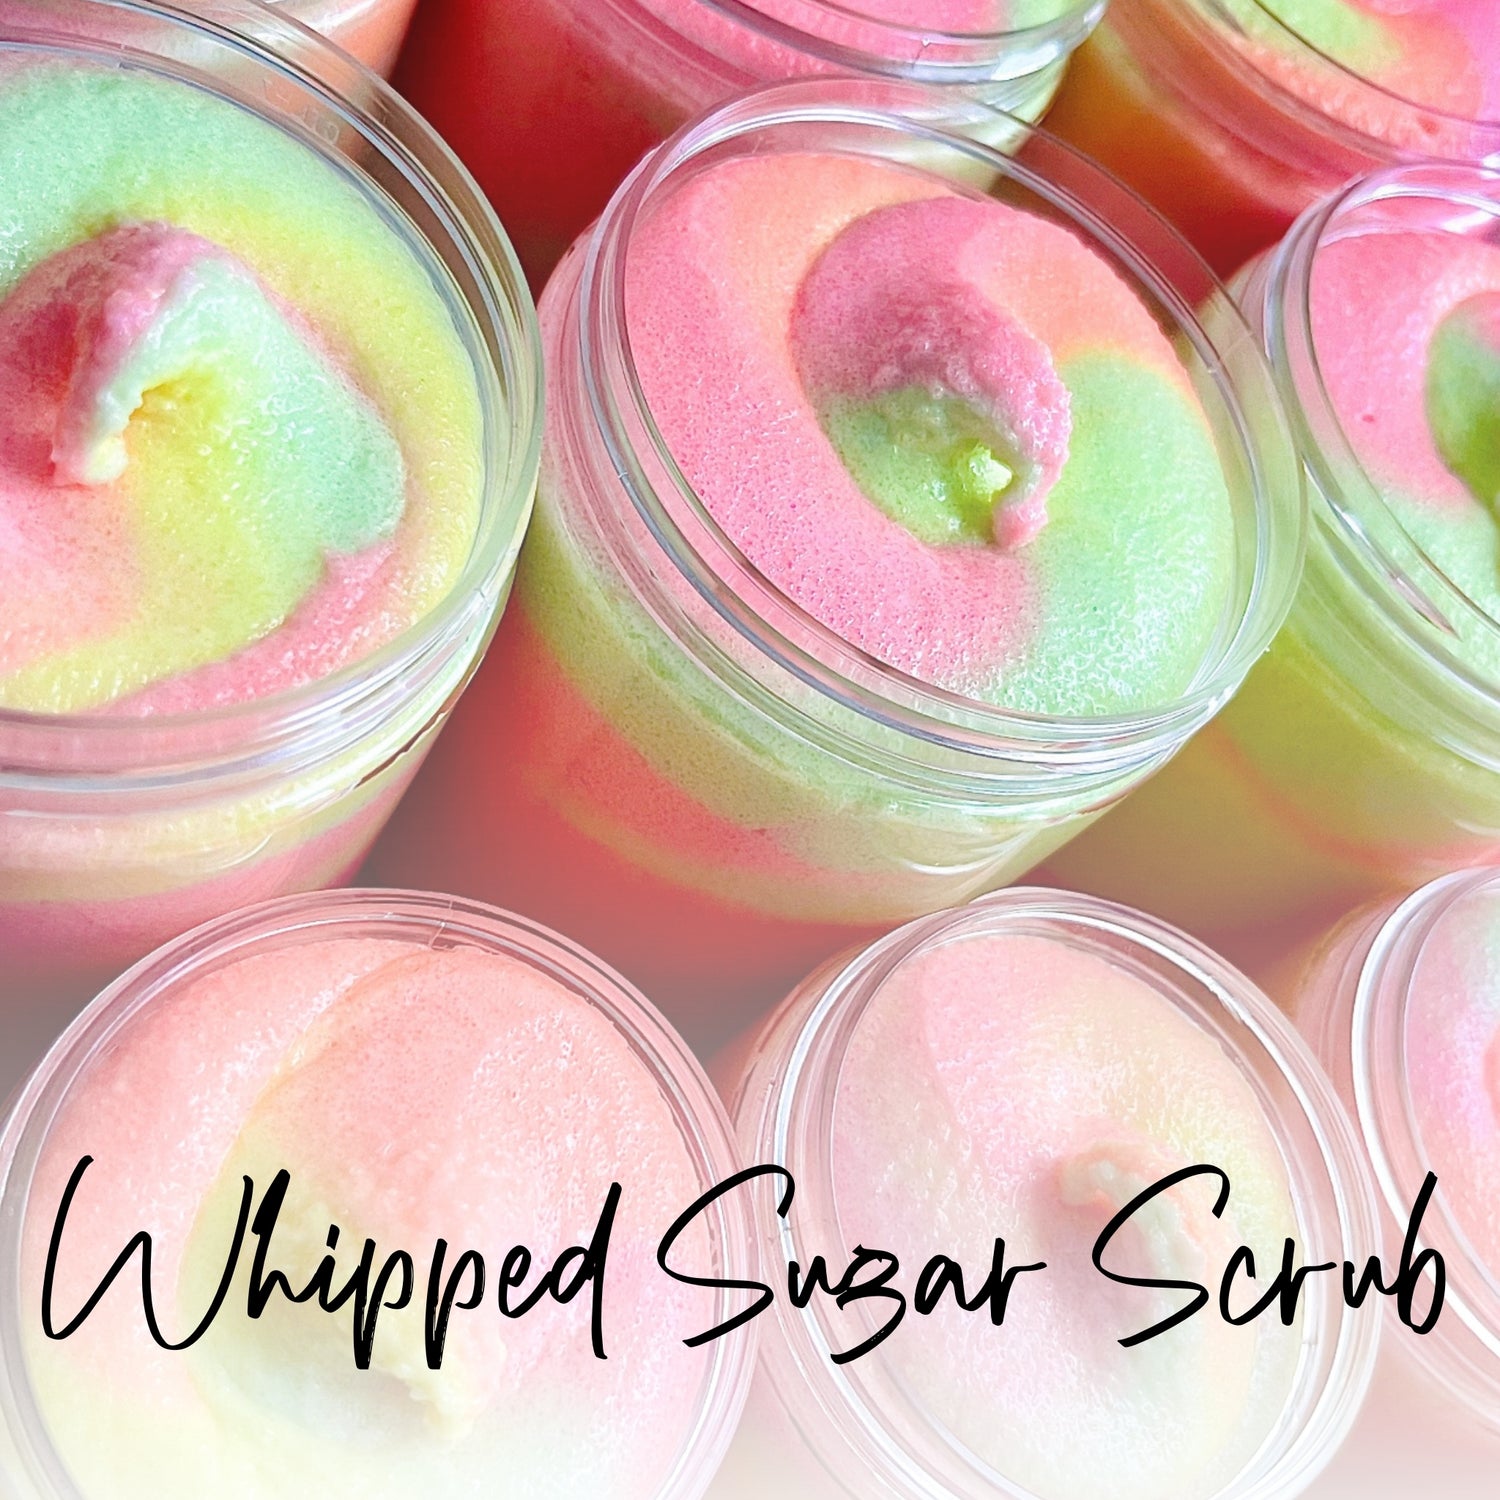 Wholesale Whipped Sugar Scrub